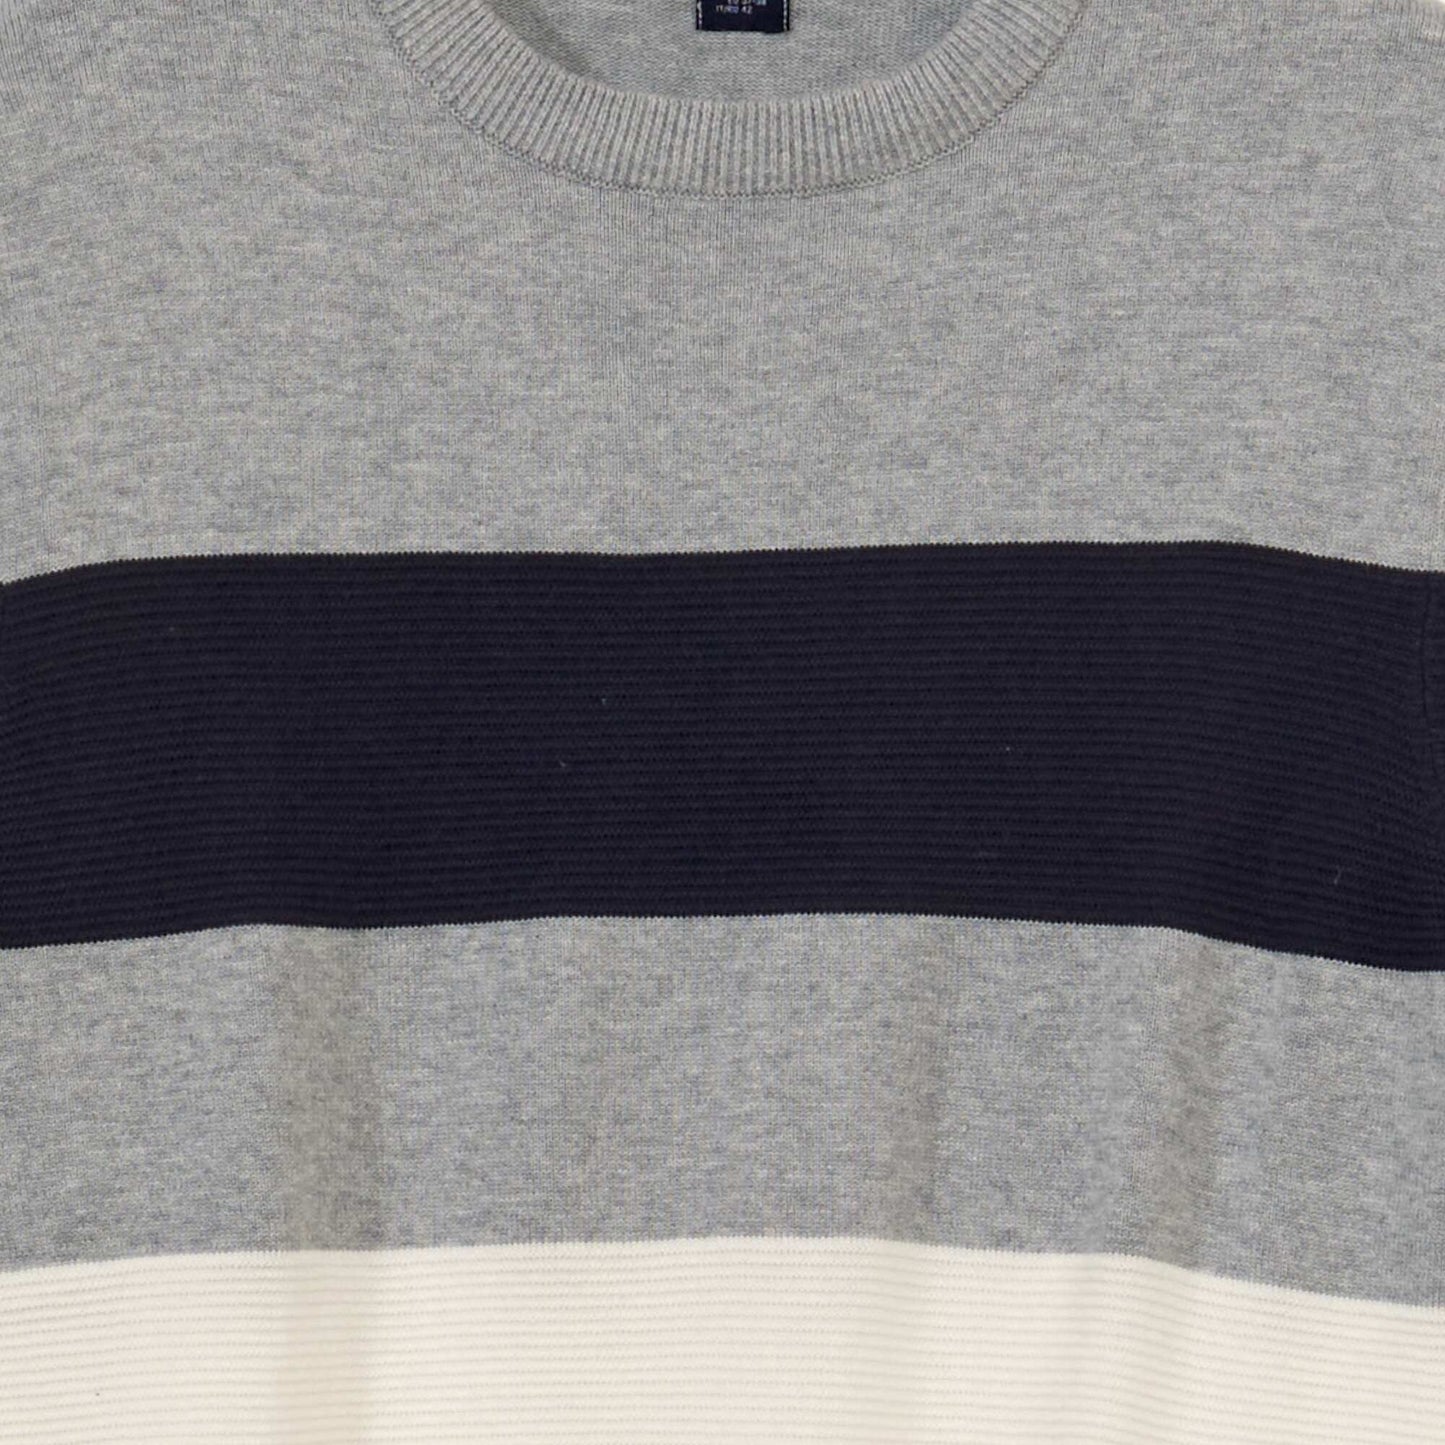 Fine-knit striped sweater GRAY STRIPE